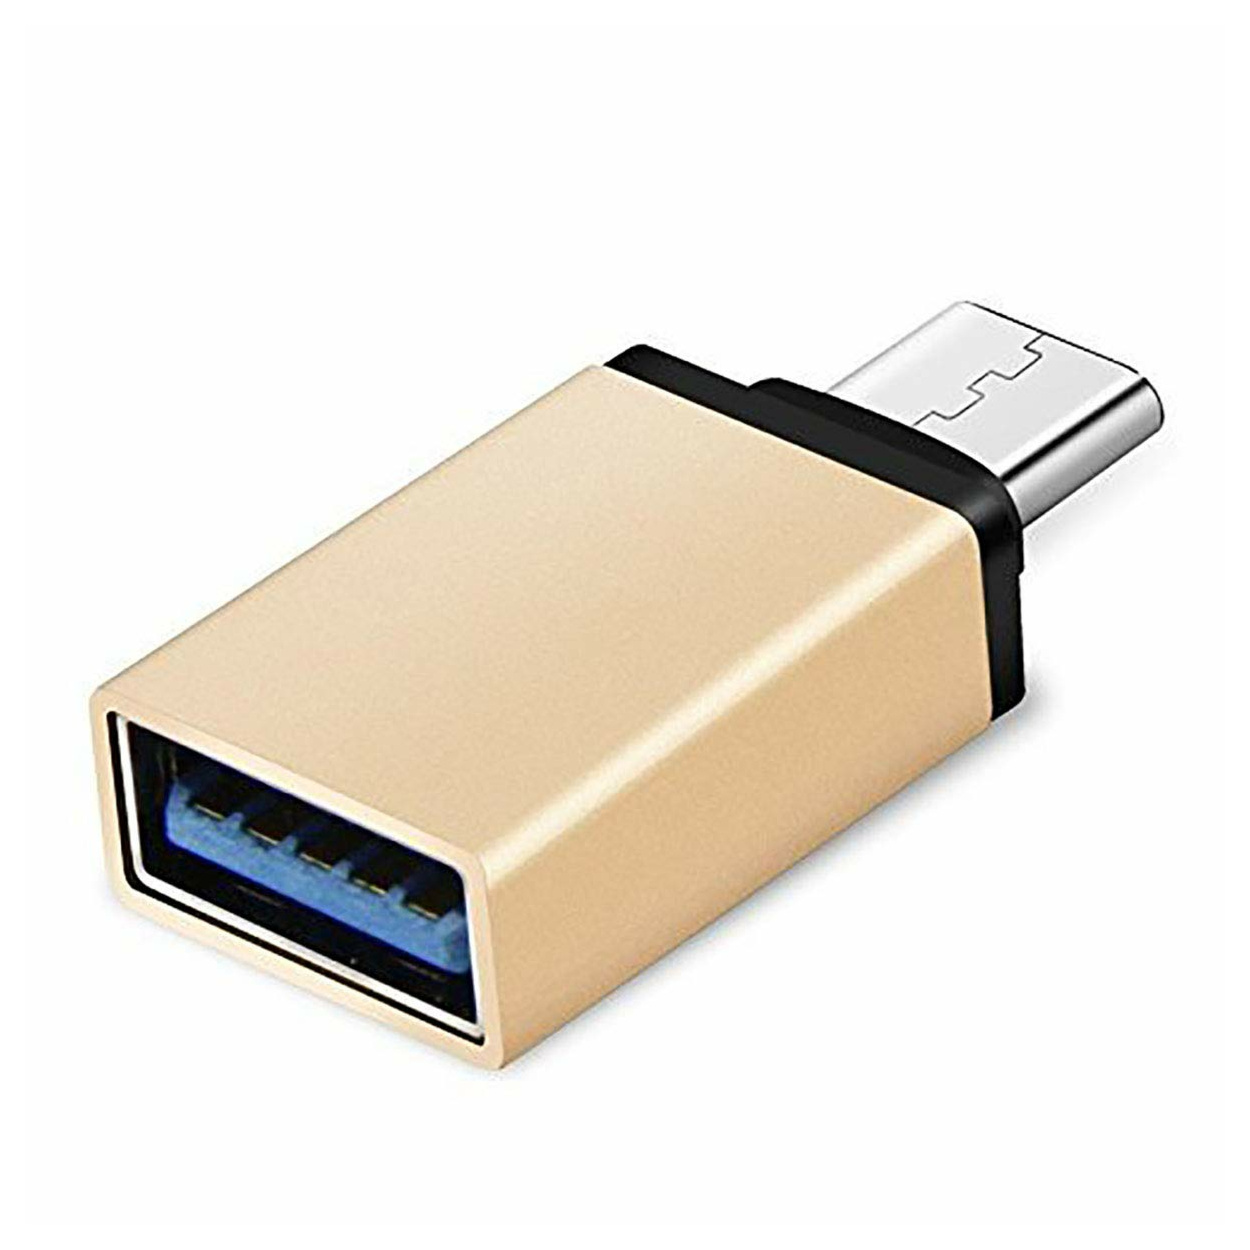 Probots Metal High-Speed Ultra-Thin USB Type-C Male OTG USB 3.0